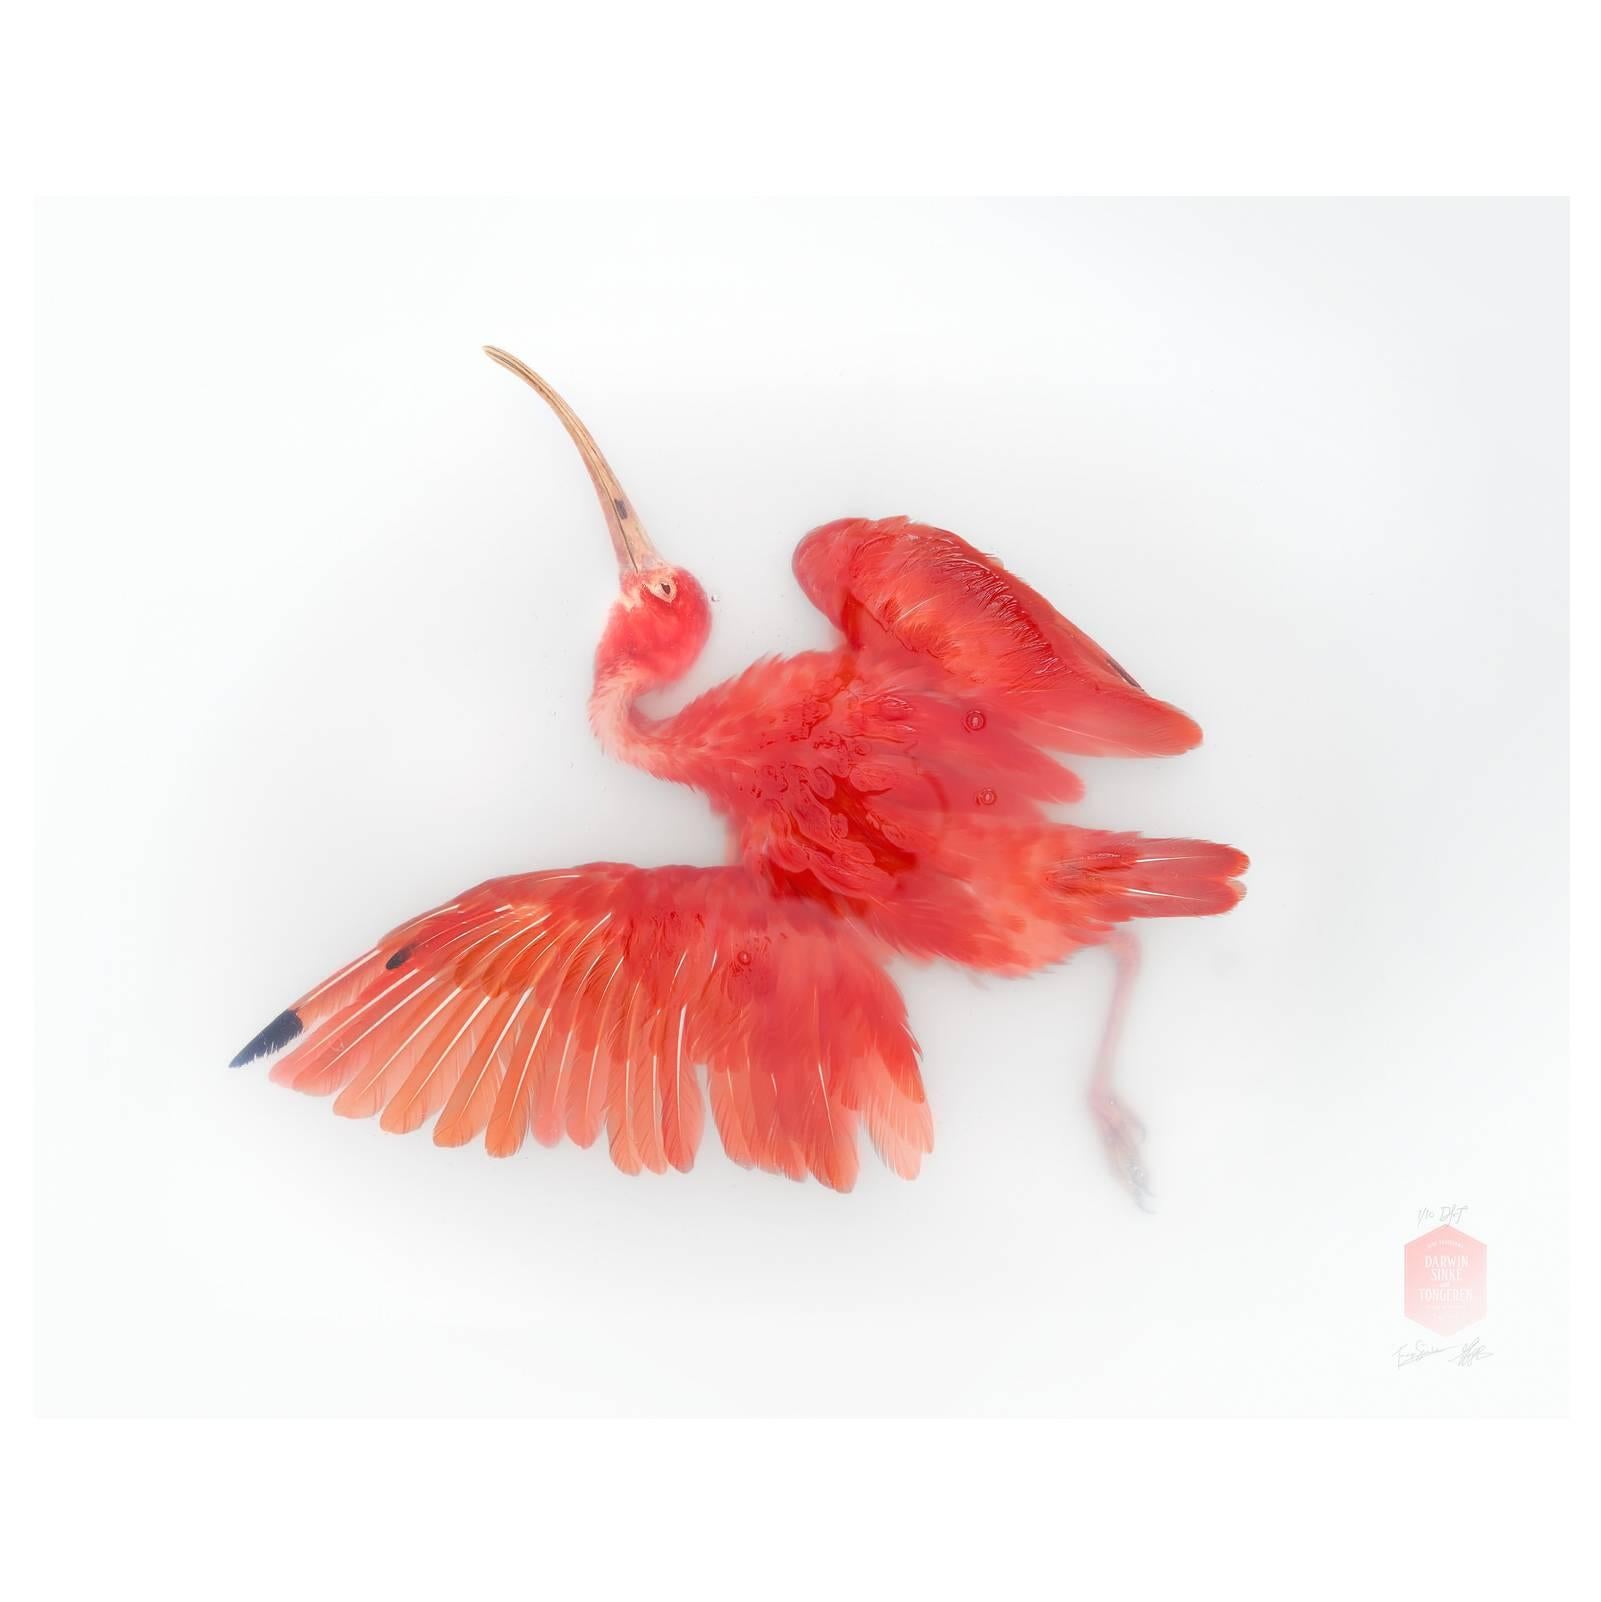 Art Print Titled 'Unknown Pose by Scarlet Ibis' by Sinke & Van Tongeren For Sale